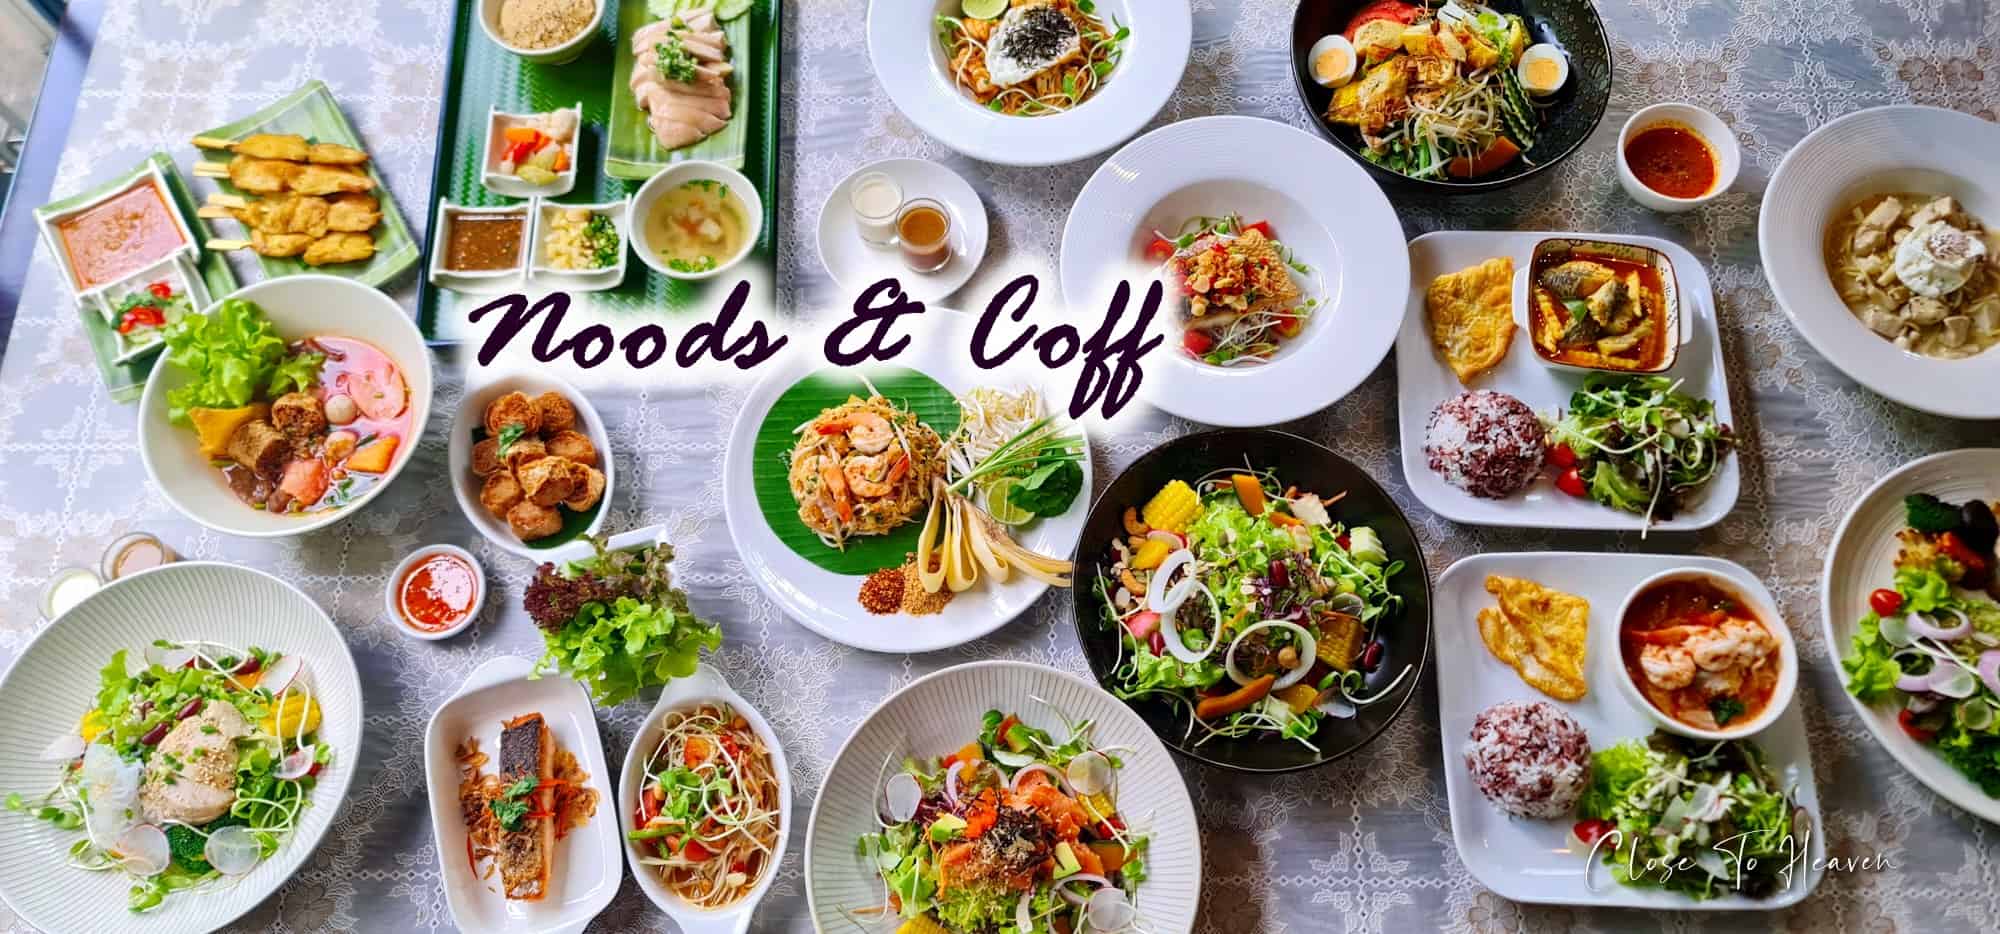 Noods & Coff นู๊ดส์แอนด์ค๊อฟฟ์ อาหารสุขภาพ อร่อยไม่ธรรมดา